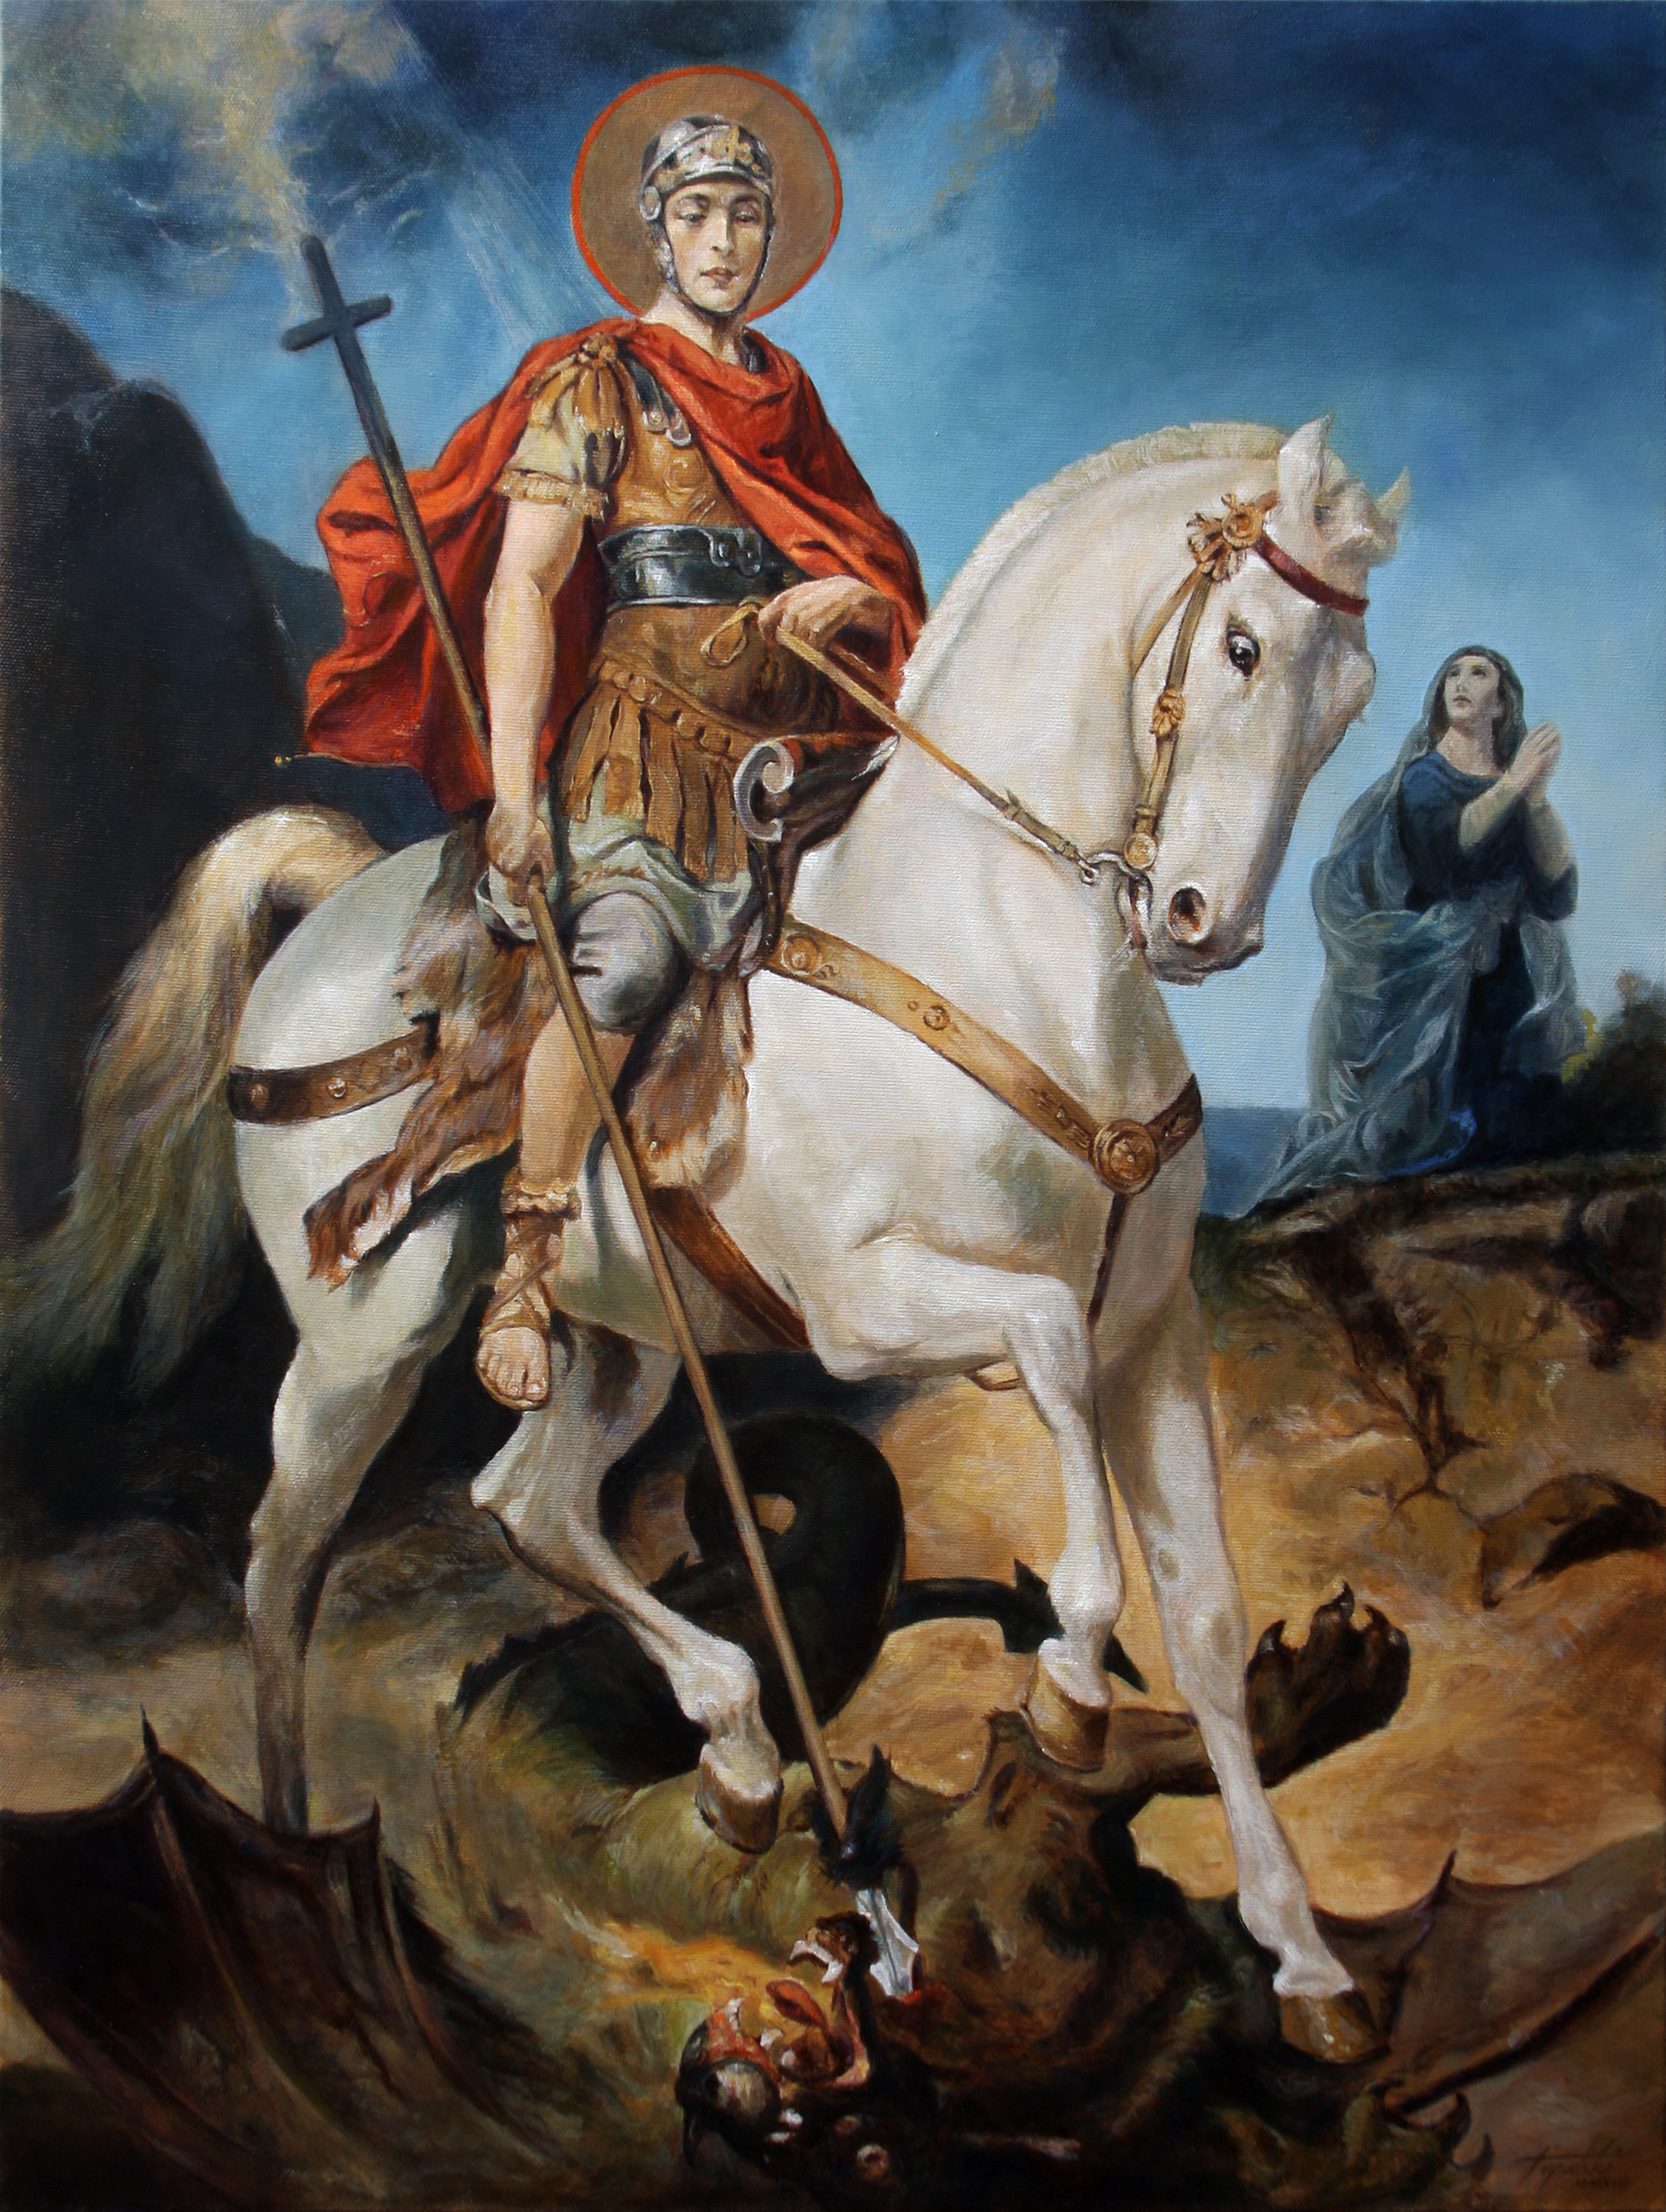 Fine-Art-Saint-George-and-the-Dragon-Original-Religious-Oil-Painting-on-Canvas-by-artist-Darko-Topalski.jpg